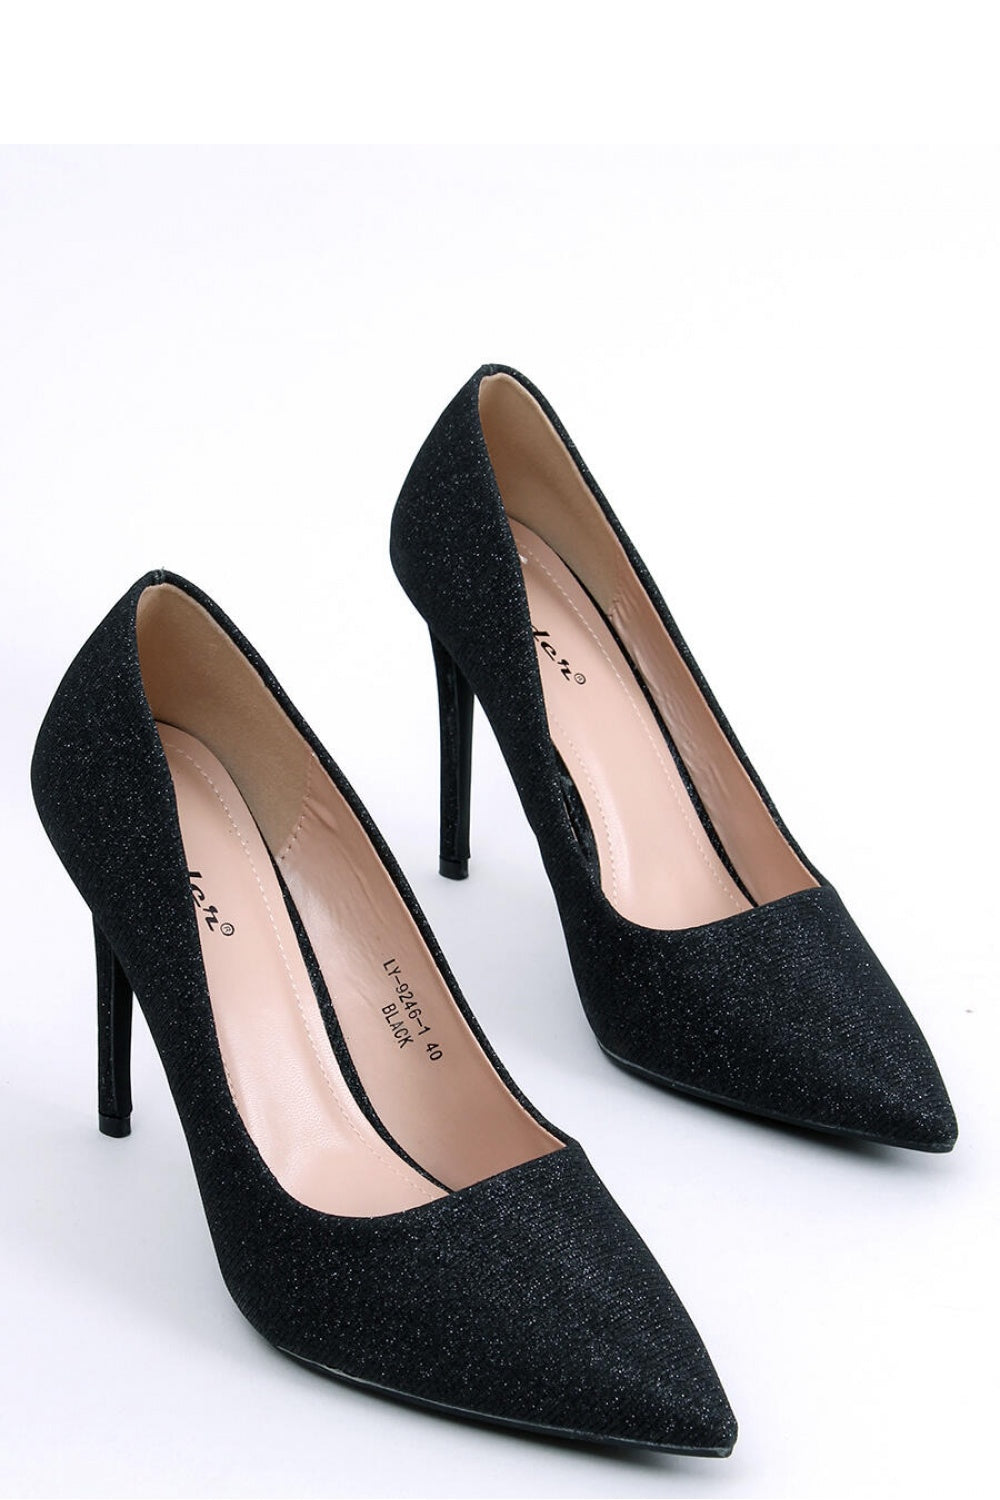 High heels model 174113 Inello Posh Styles Apparel